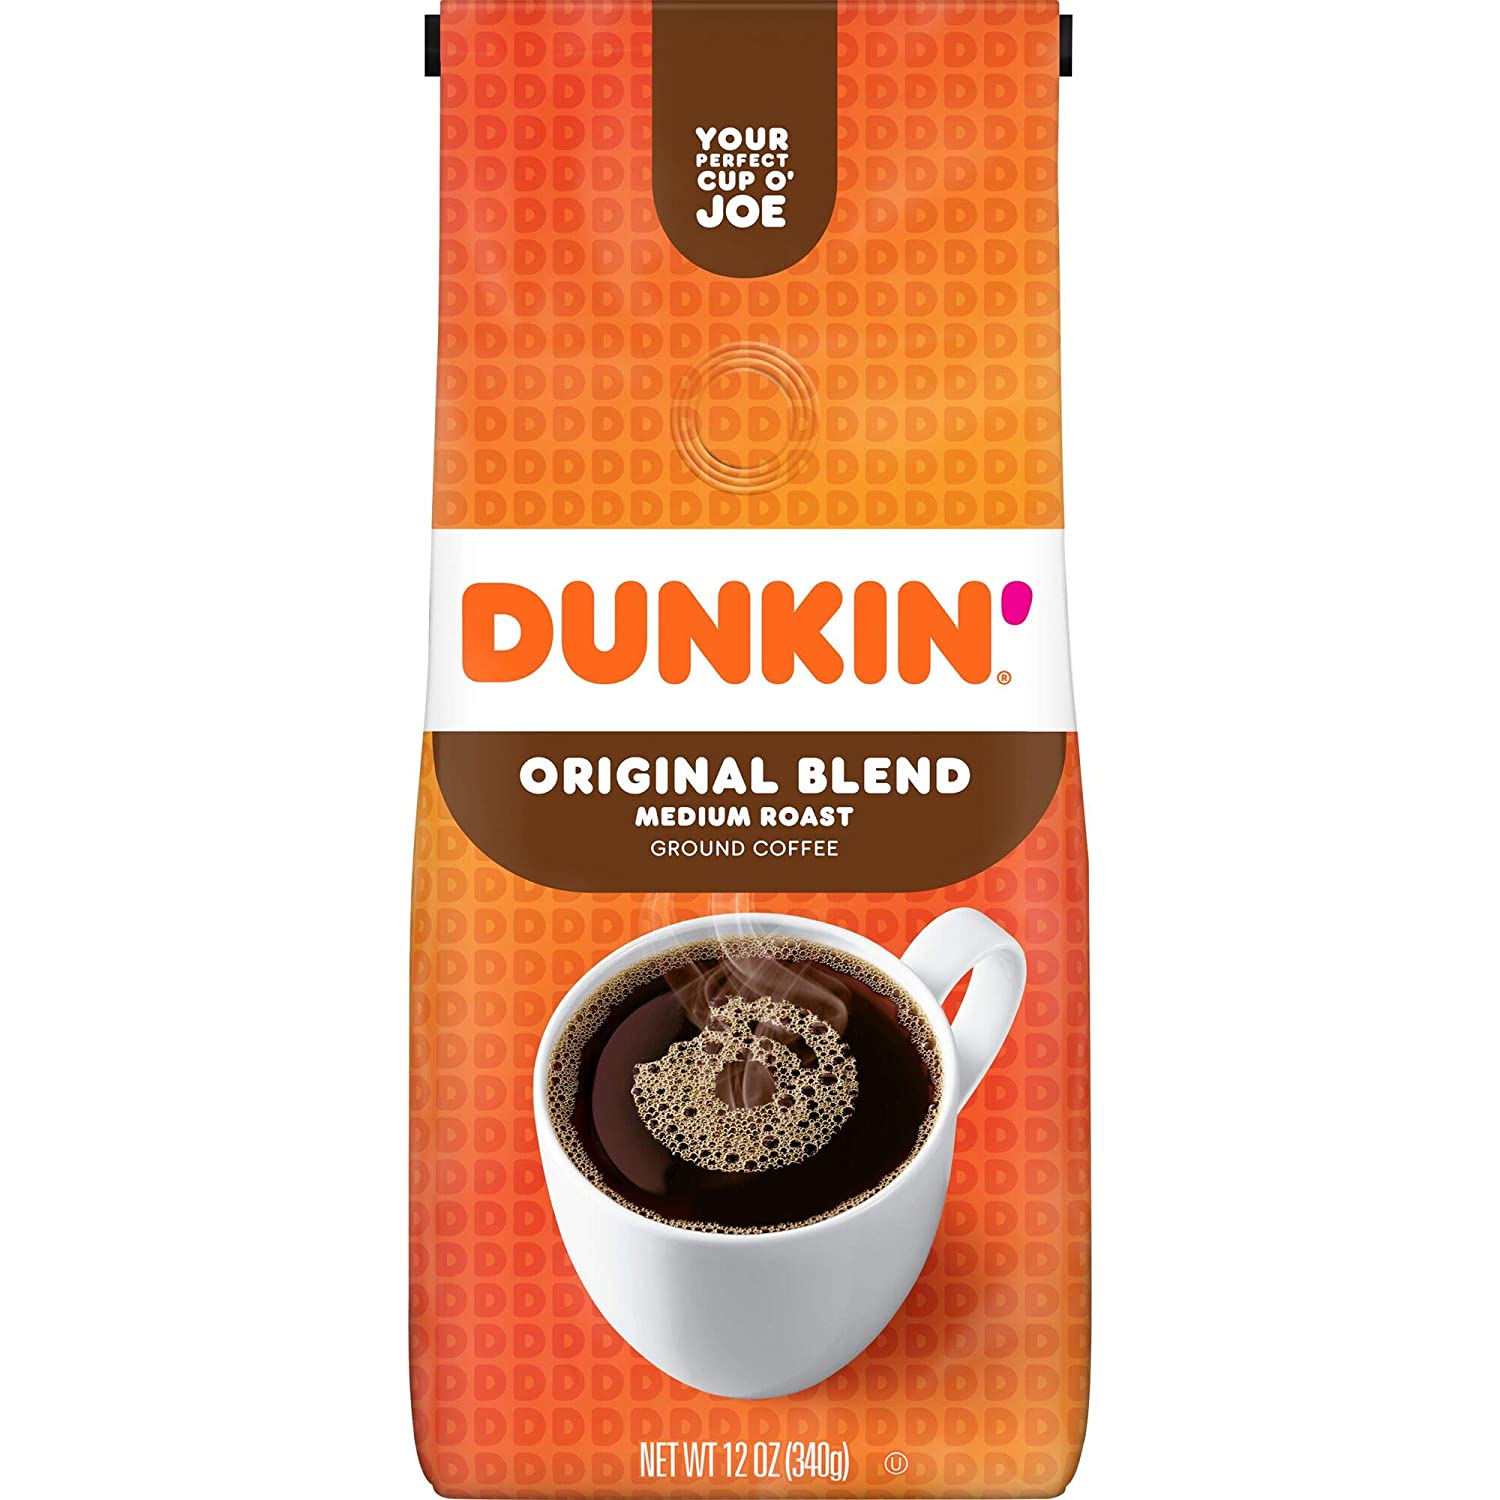 Dunkin' Original Blend Medium Roast Ground Coffee, 12 Ounces $5.64